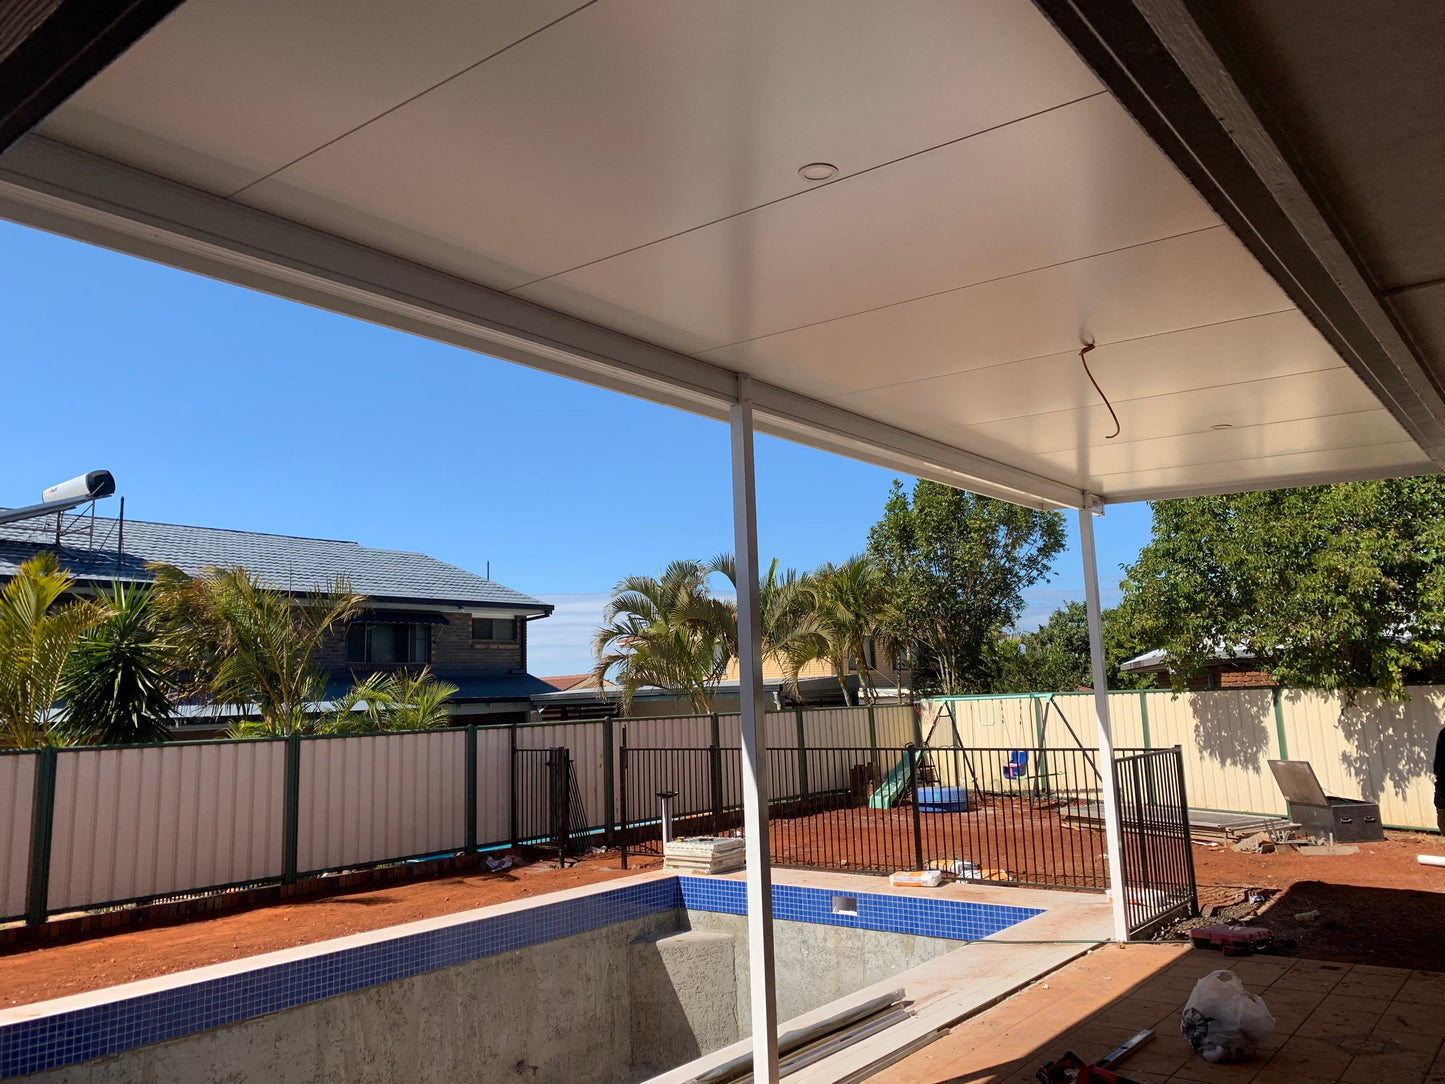 SmartKits Australia Insulated Flyover Roof- 15m (L) x 8m (W).